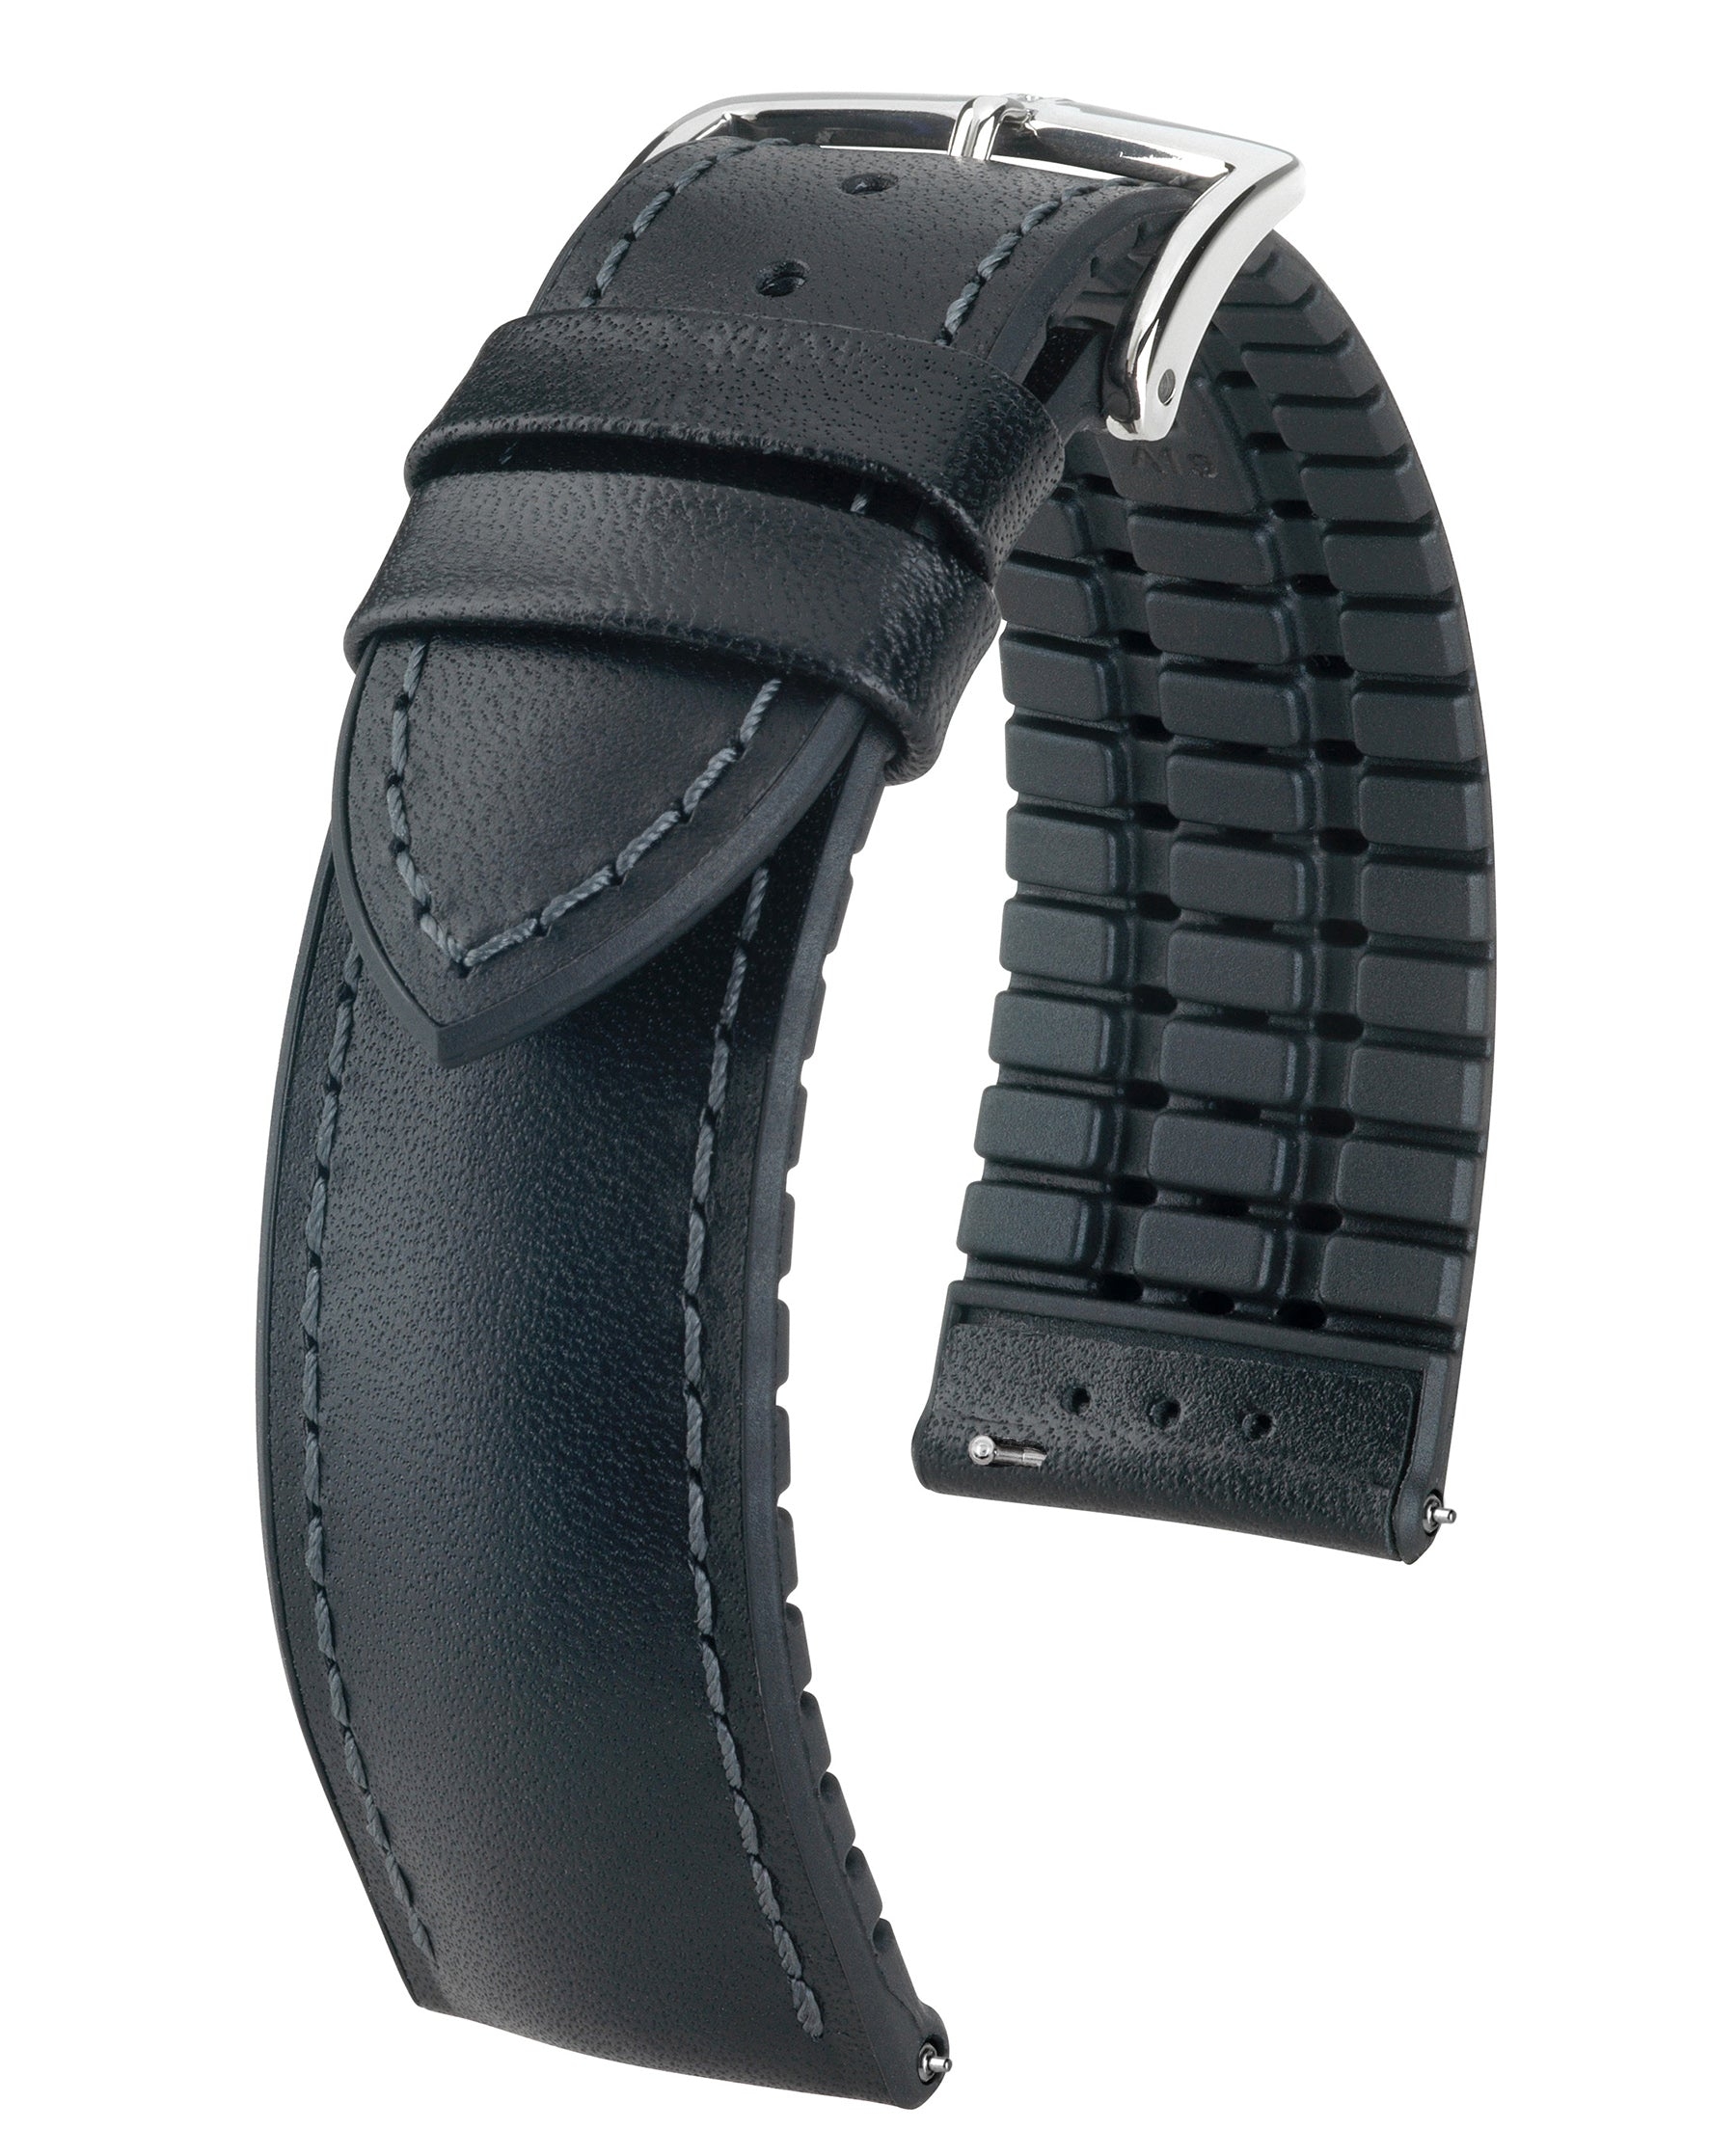 Hirsch James Waterproof Leather Watch Band Black, 20mm